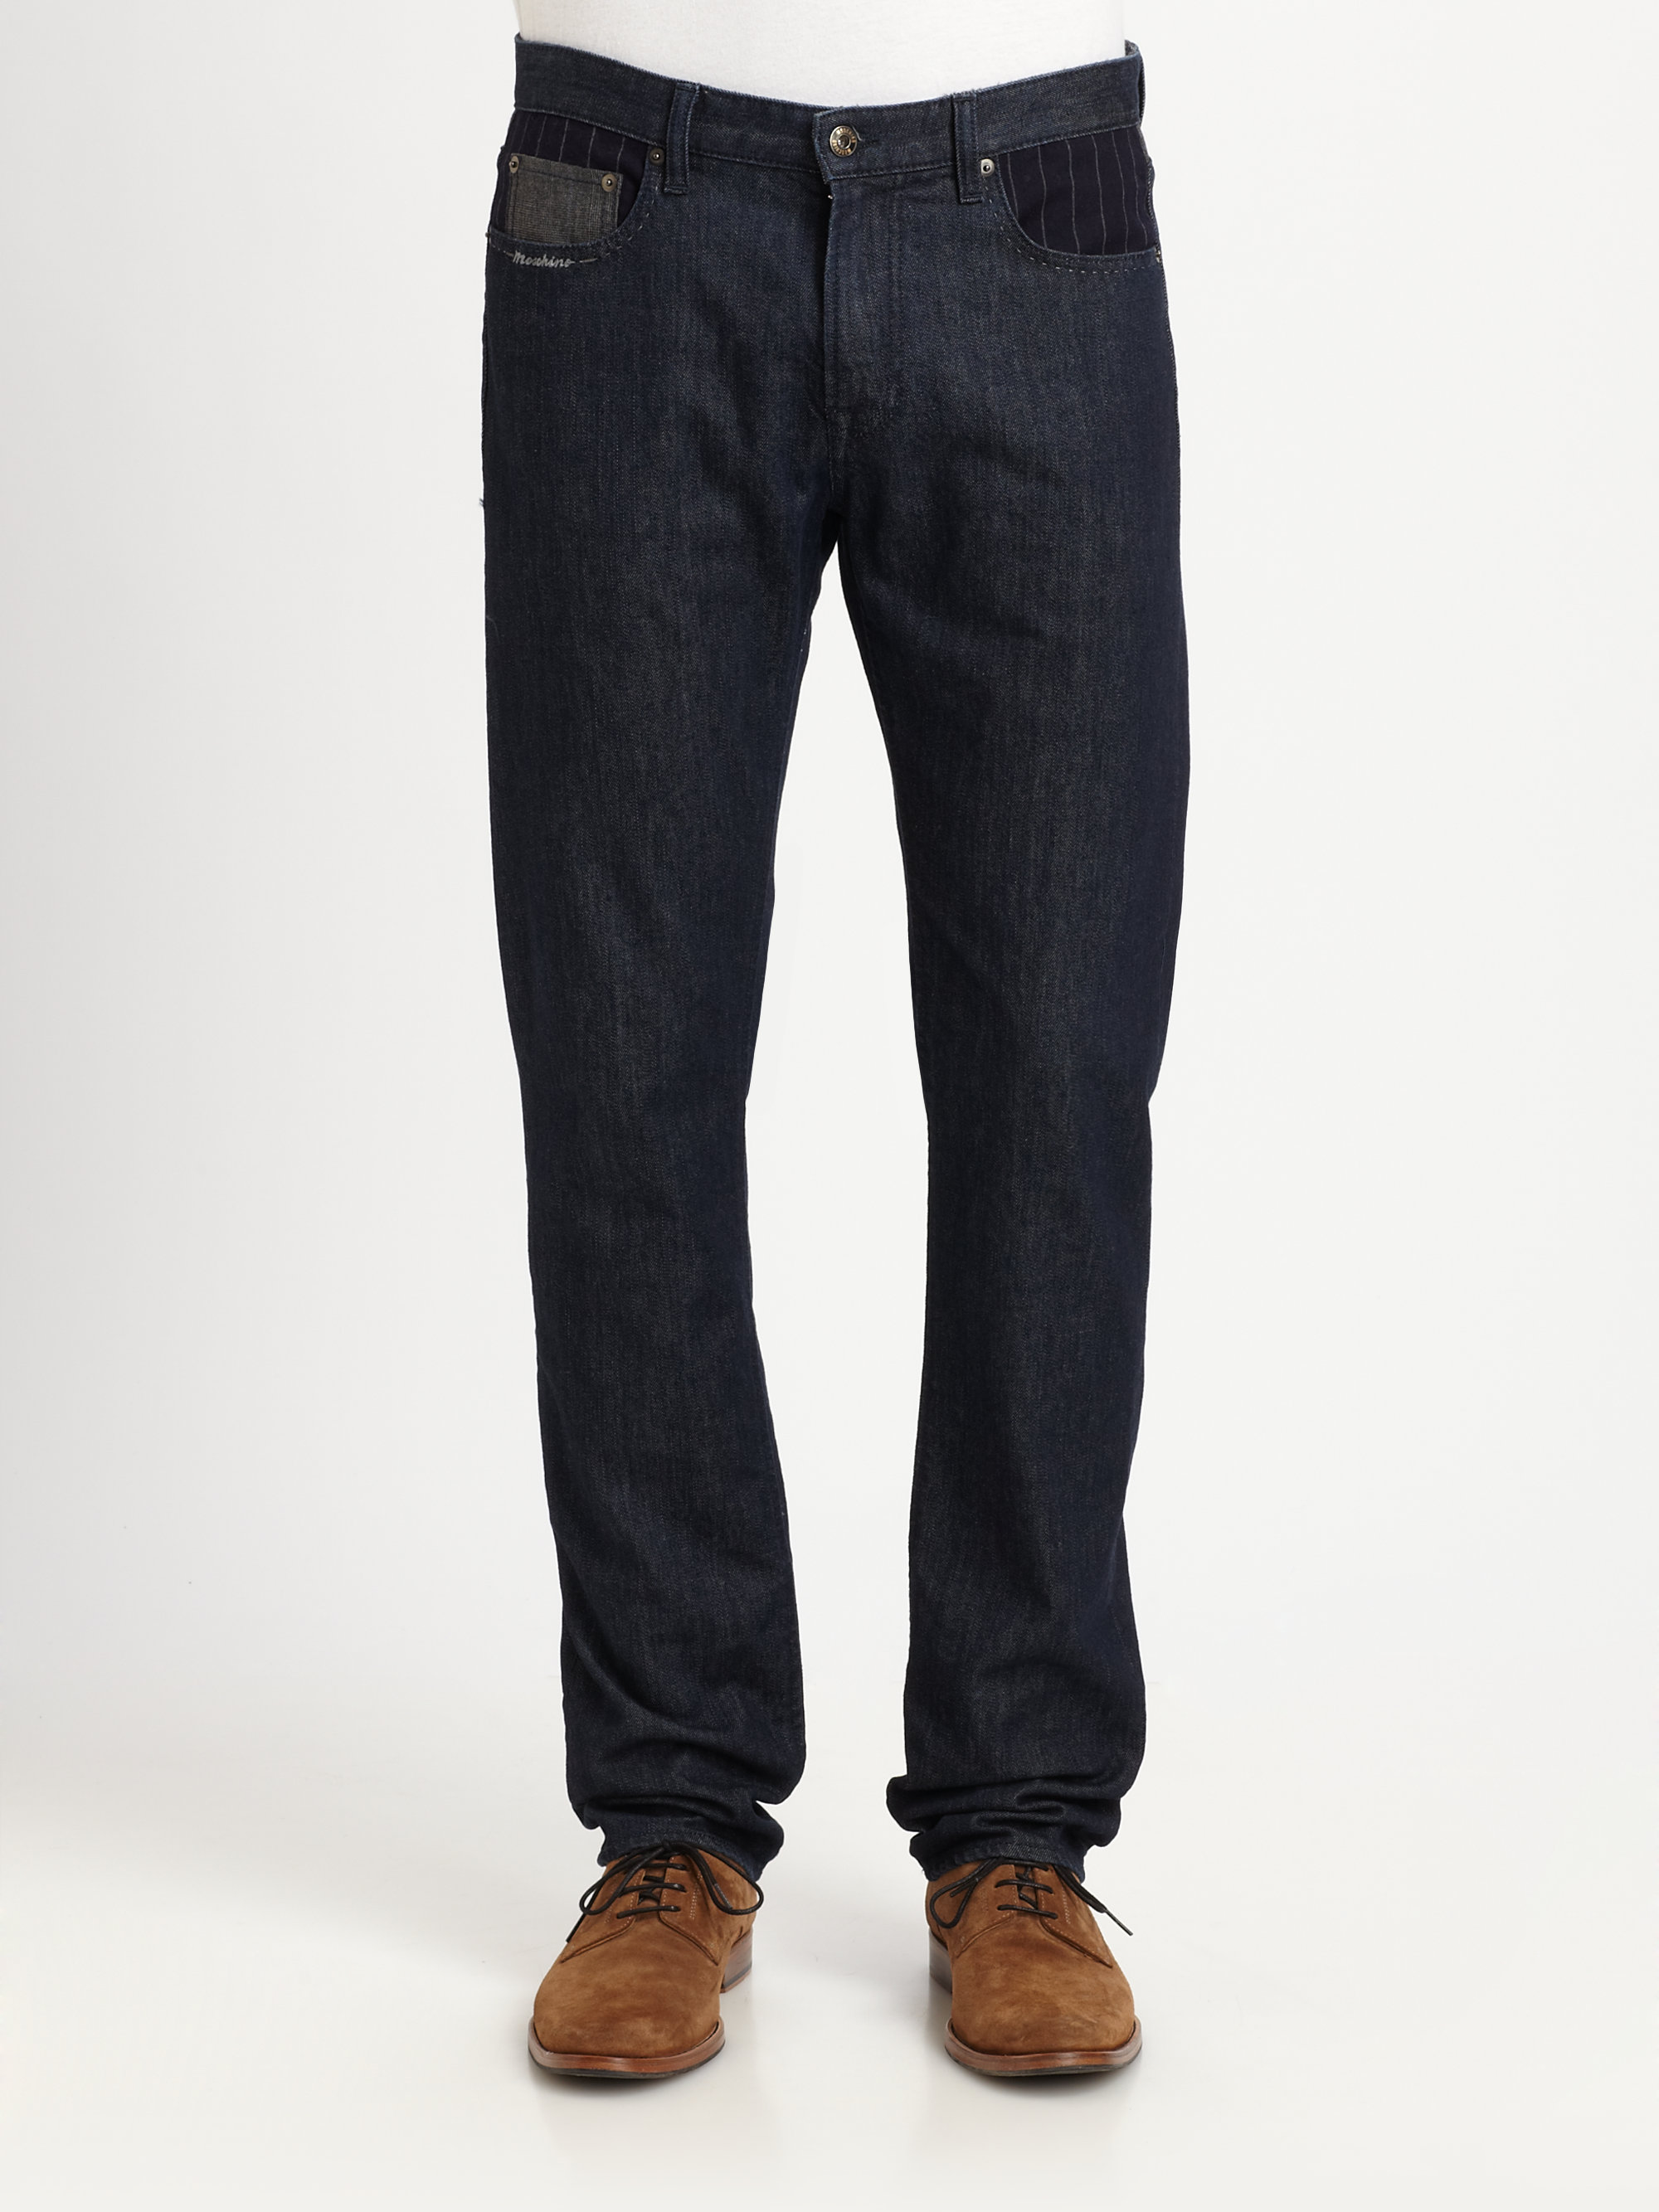 Moschino Fivepocket Denim Jeans in Blue for Men - Lyst